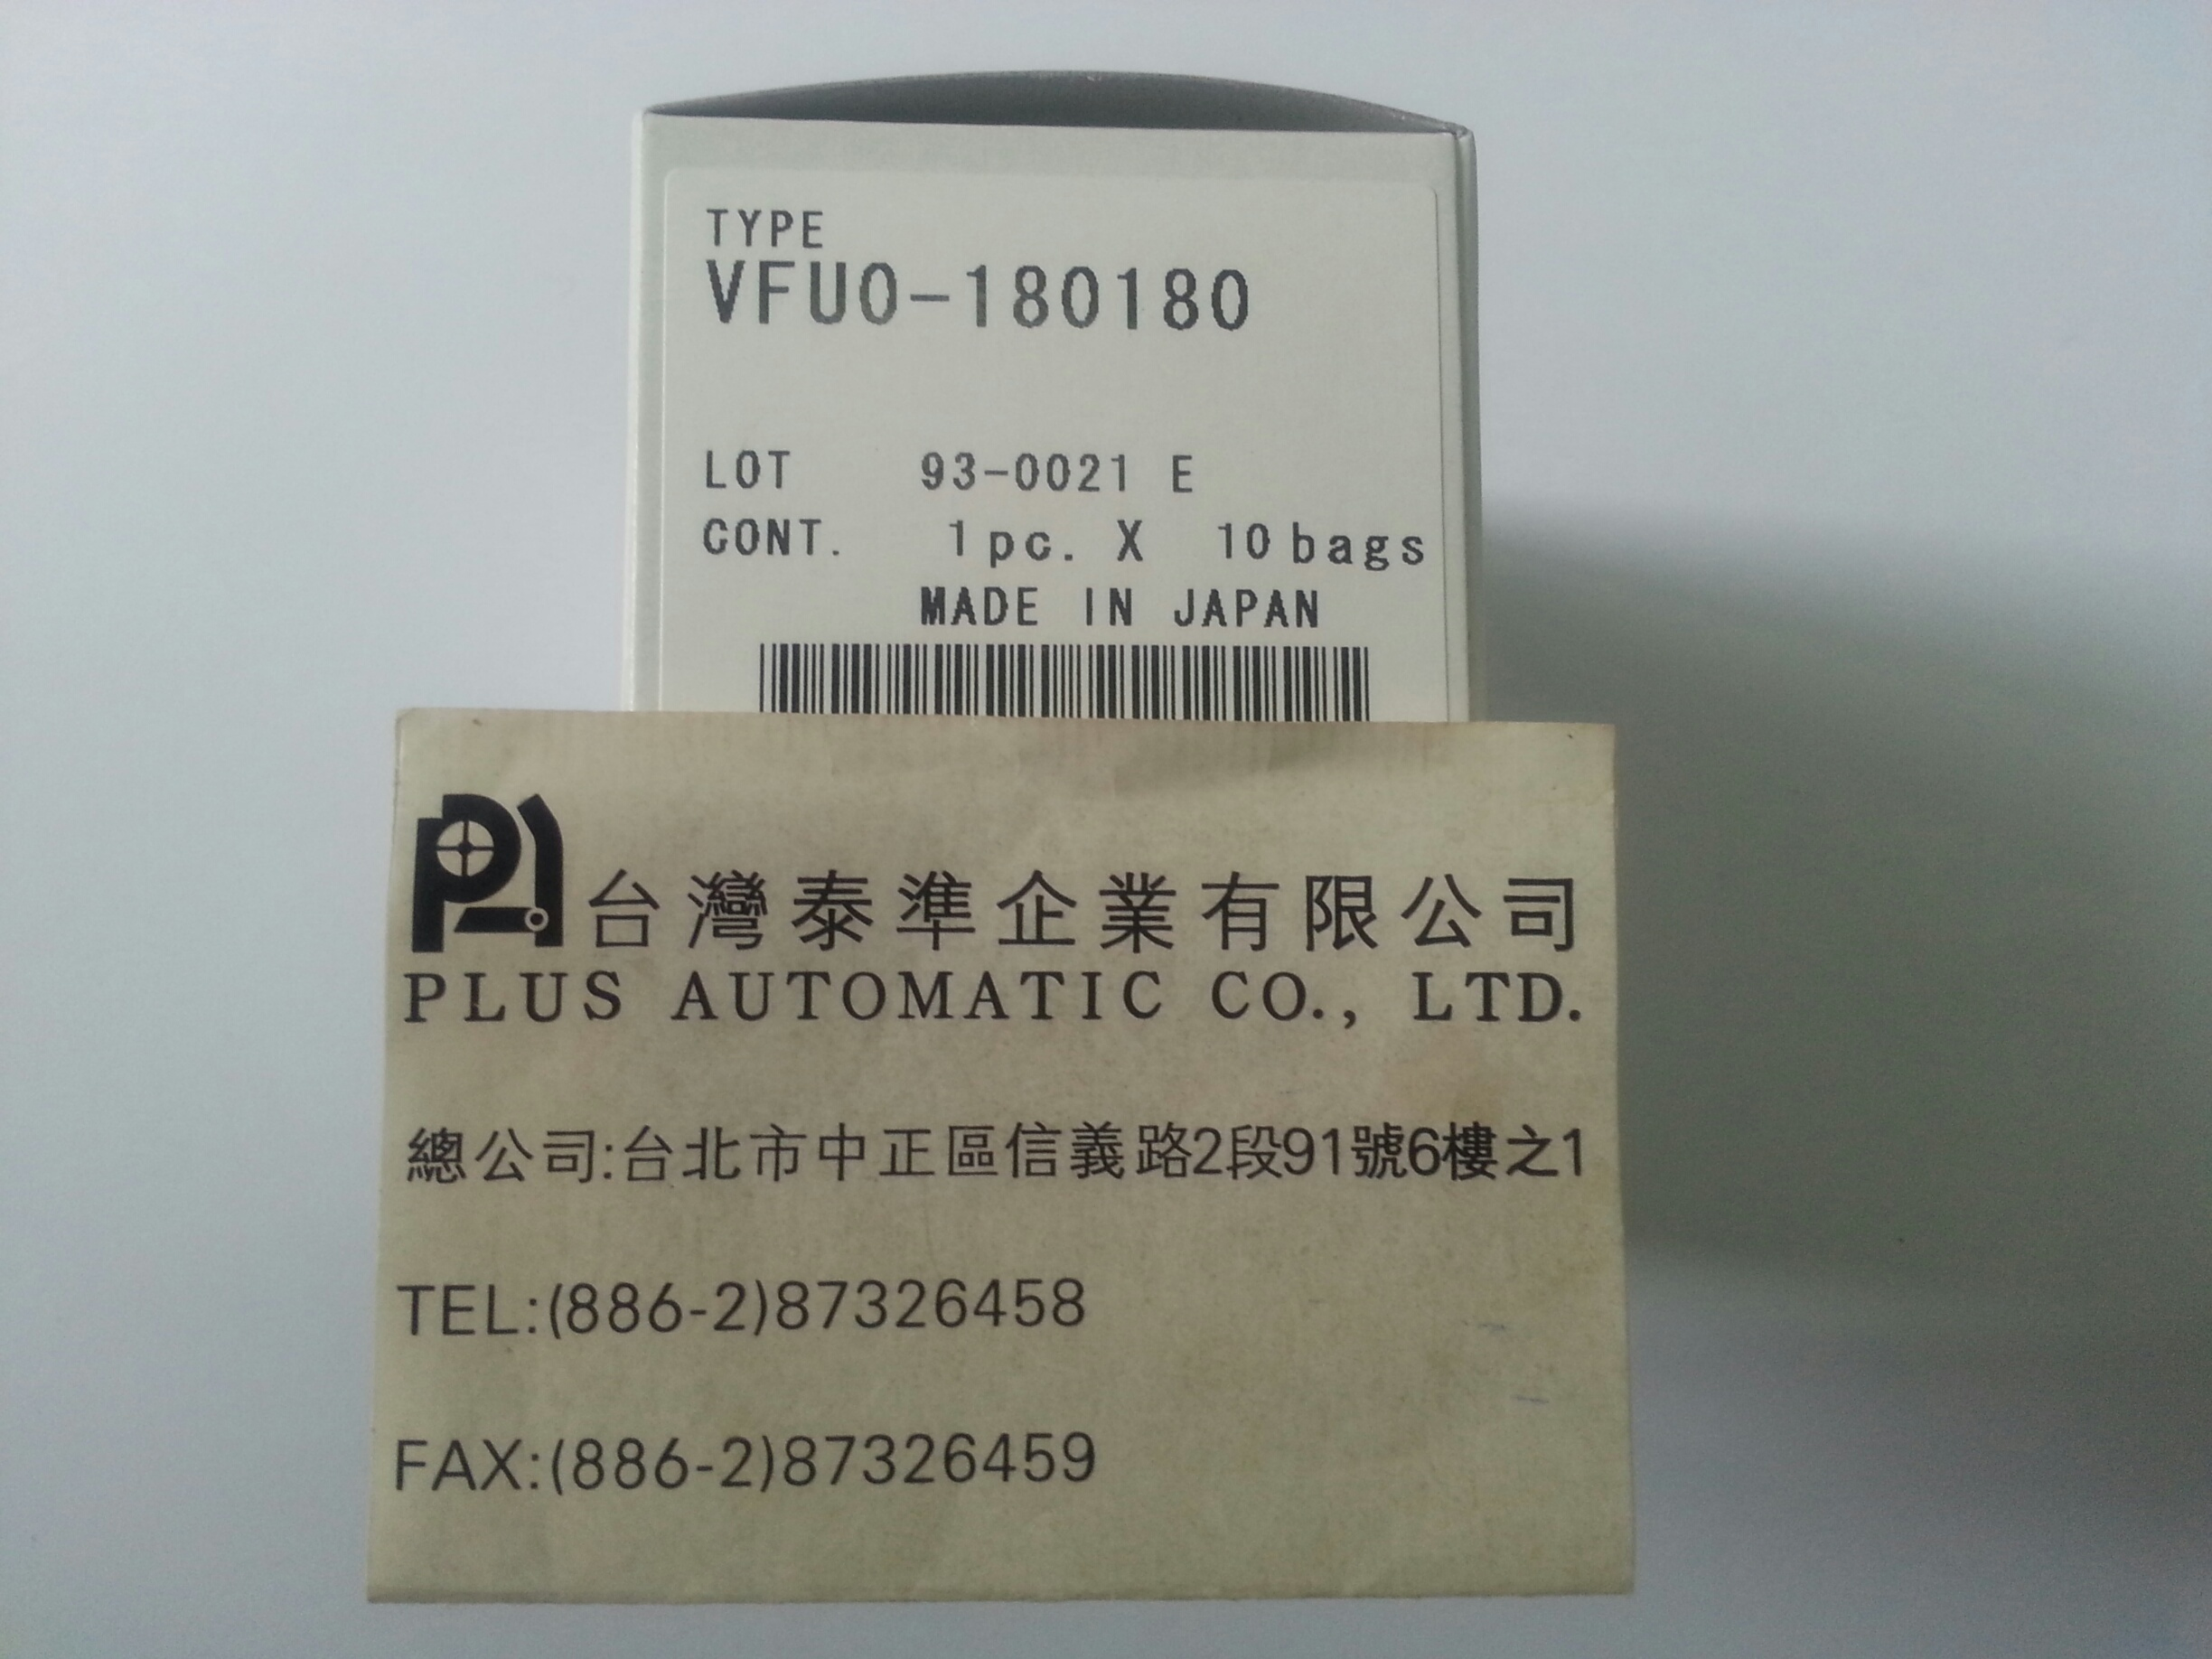 VFU0-180180 PISCO 小型真空過濾器